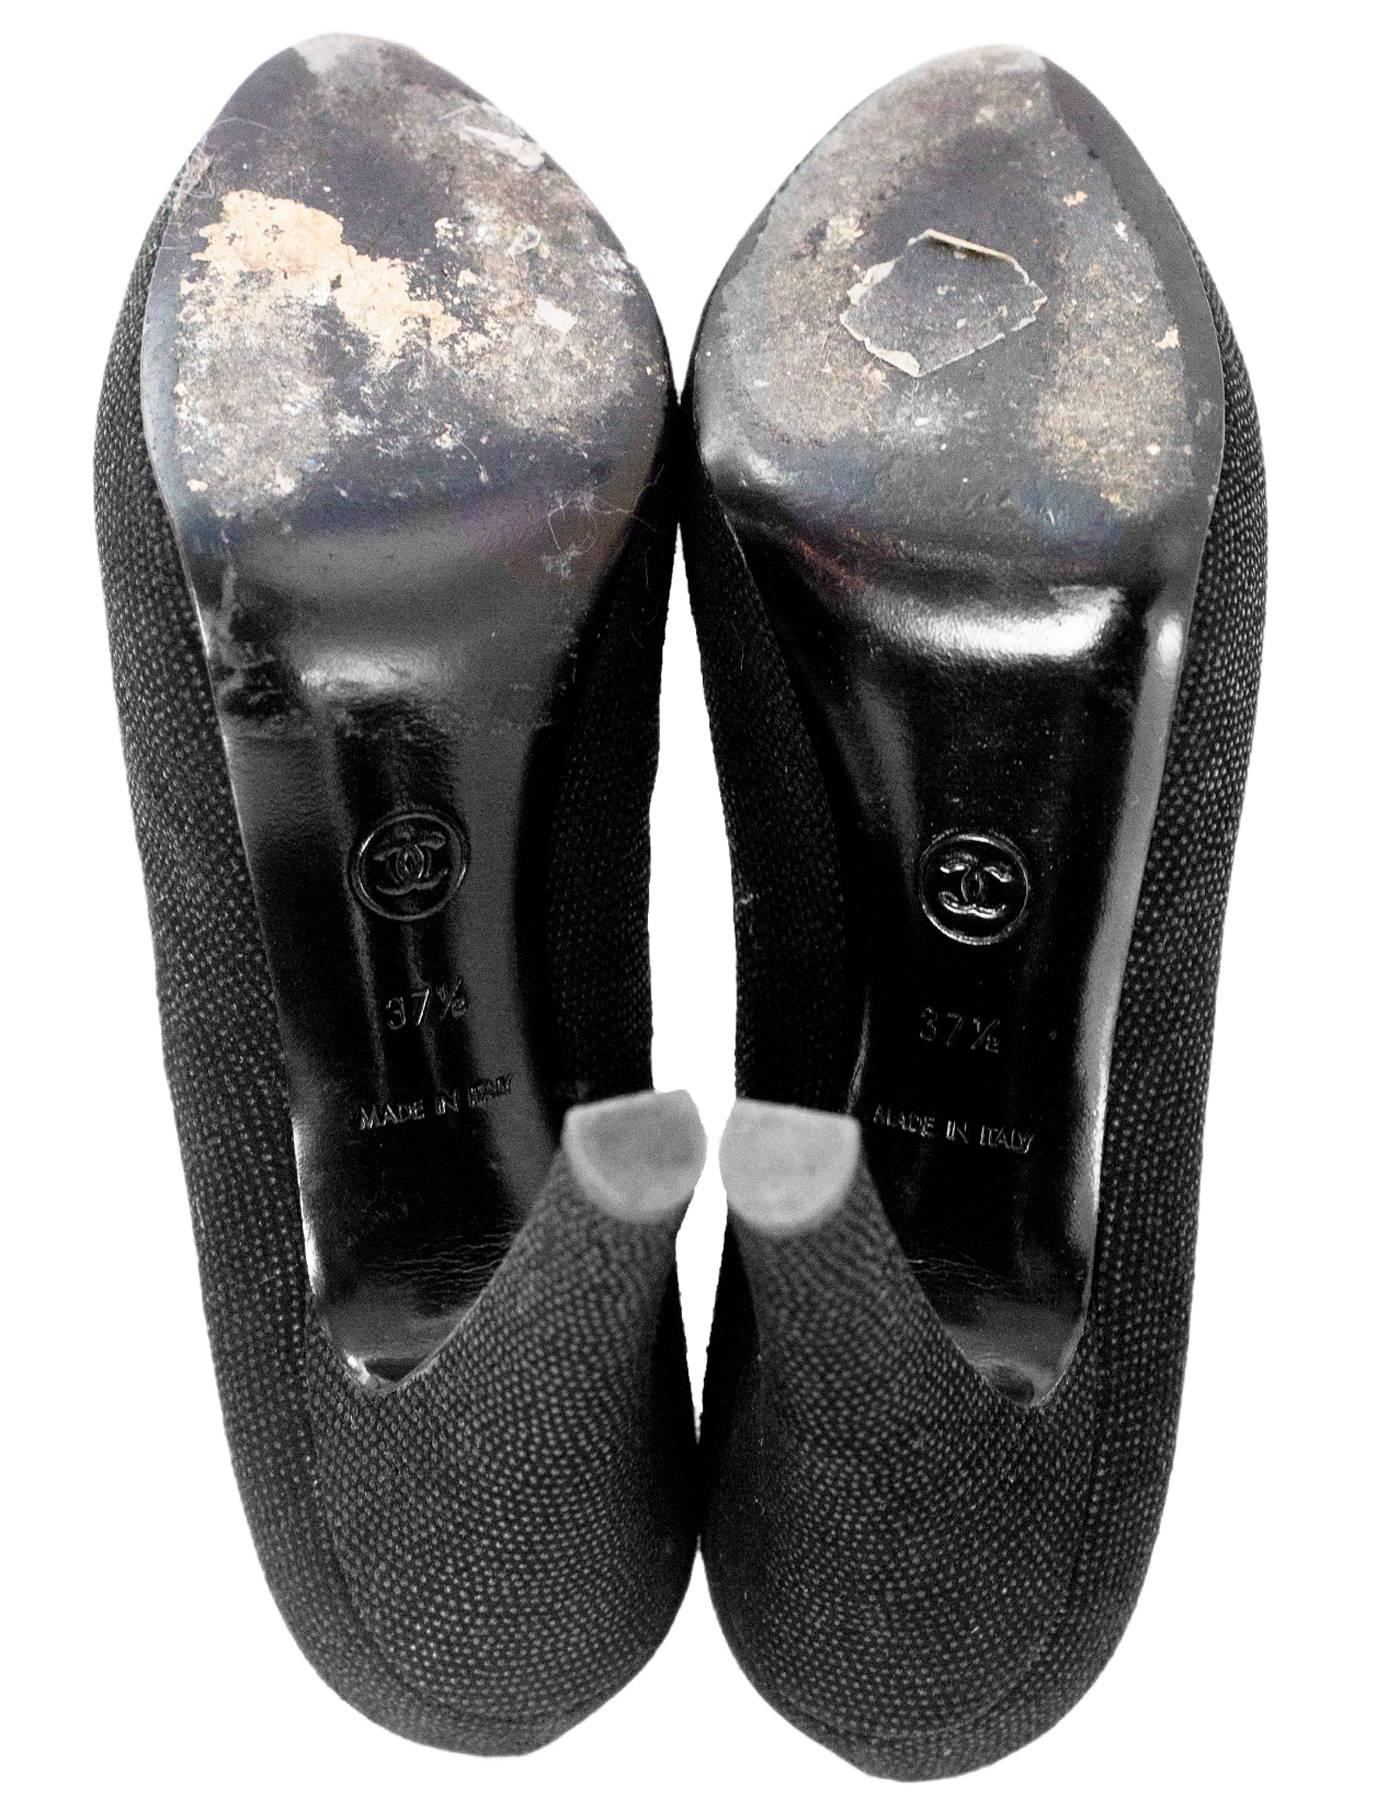 Chanel Black Textured Peep-Toe Pumps Sz 37.5 1